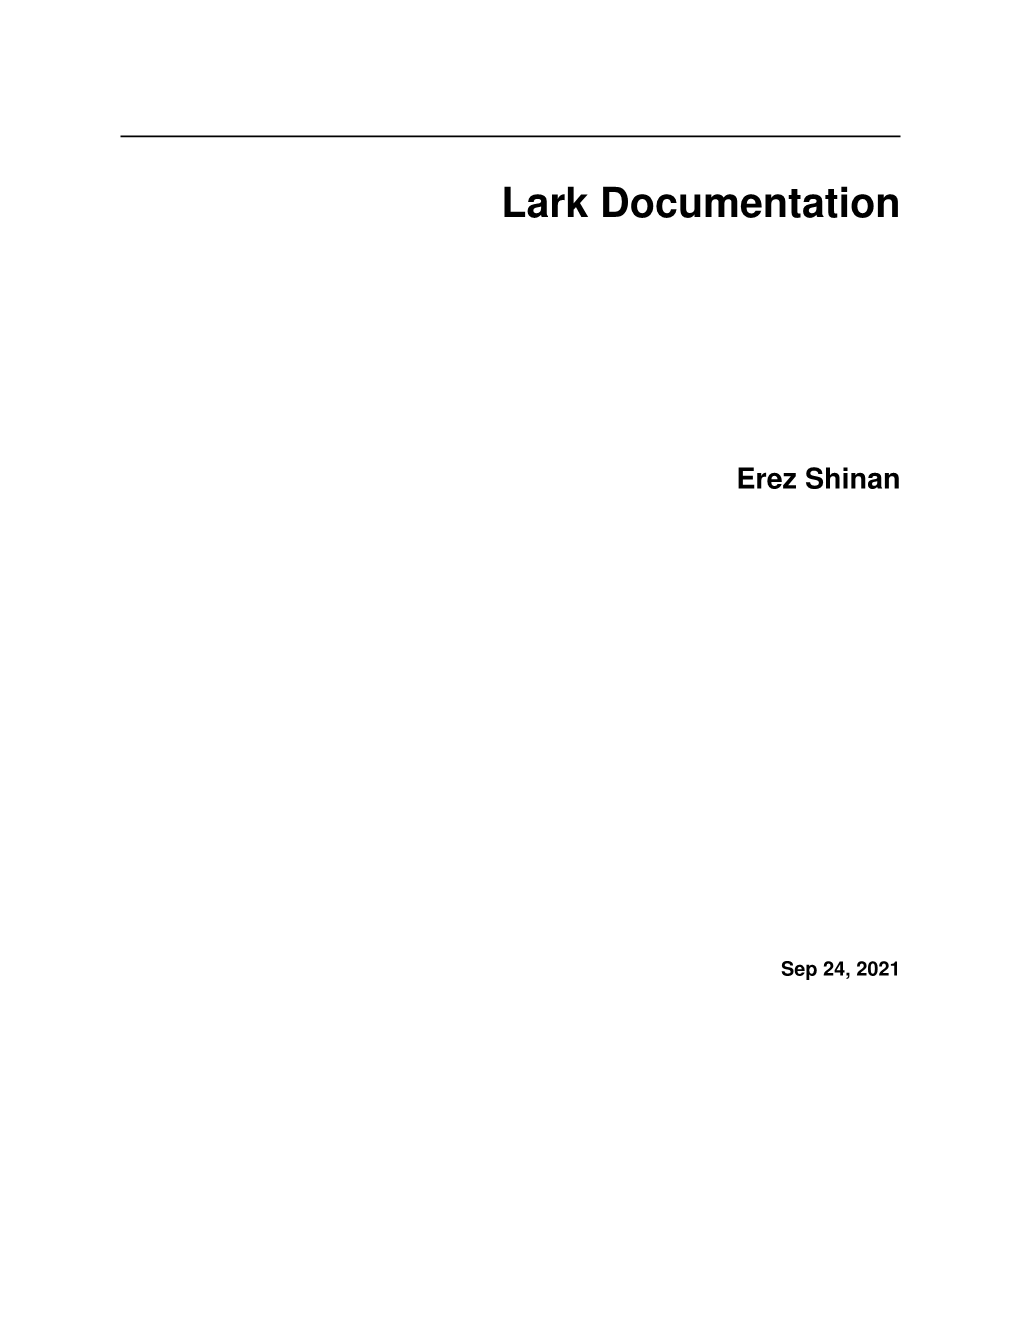 Lark Documentation Erez Shinan